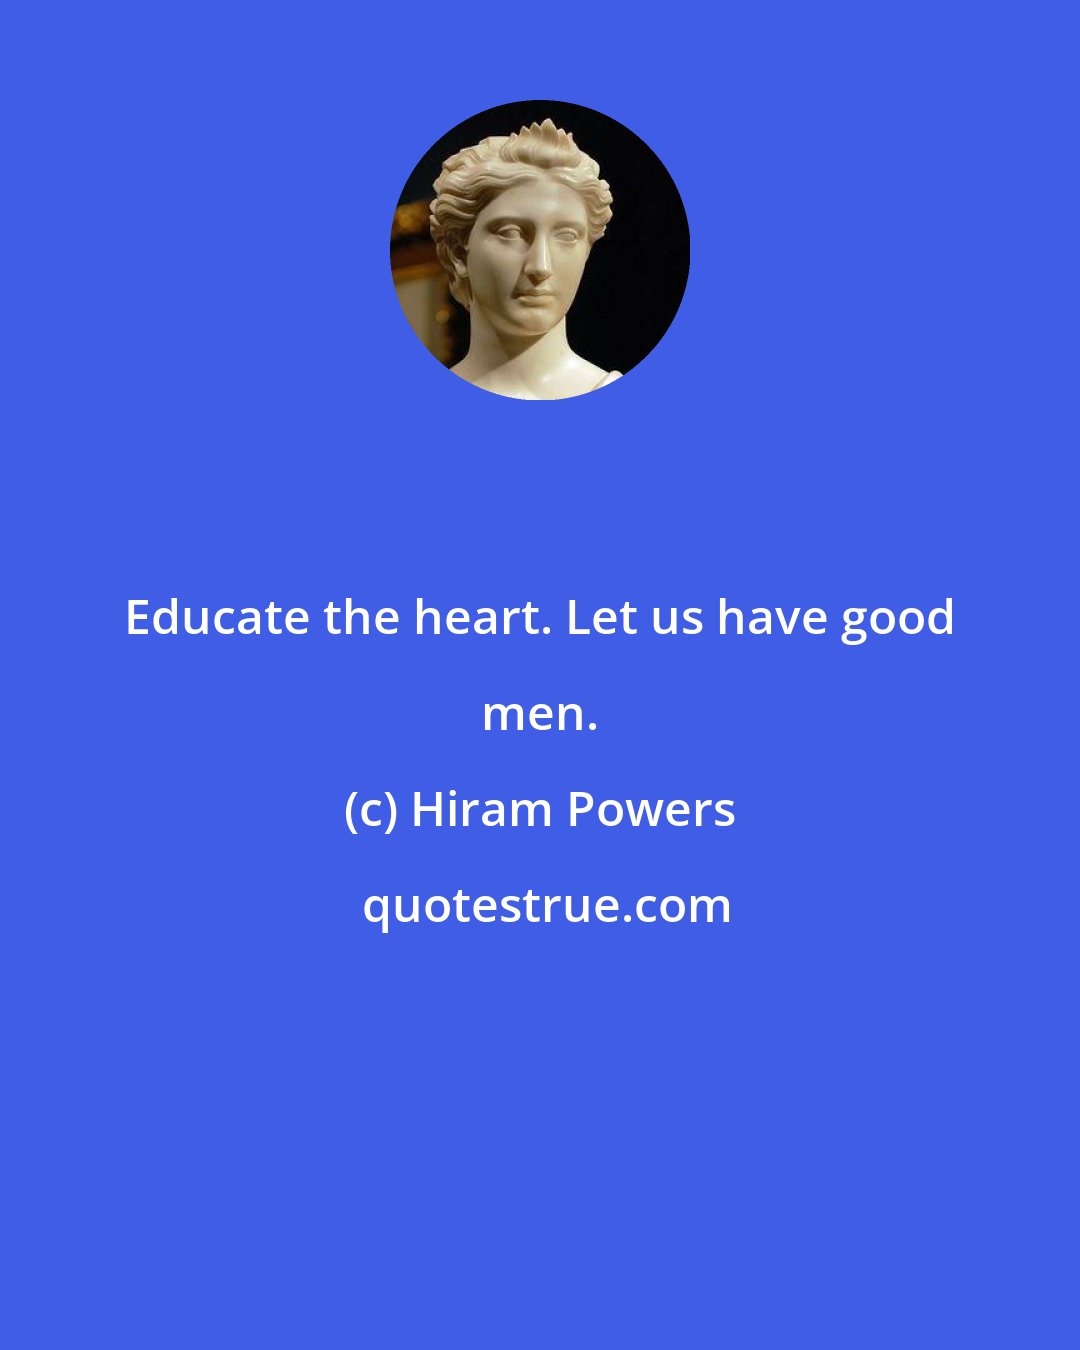 Hiram Powers: Educate the heart. Let us have good men.